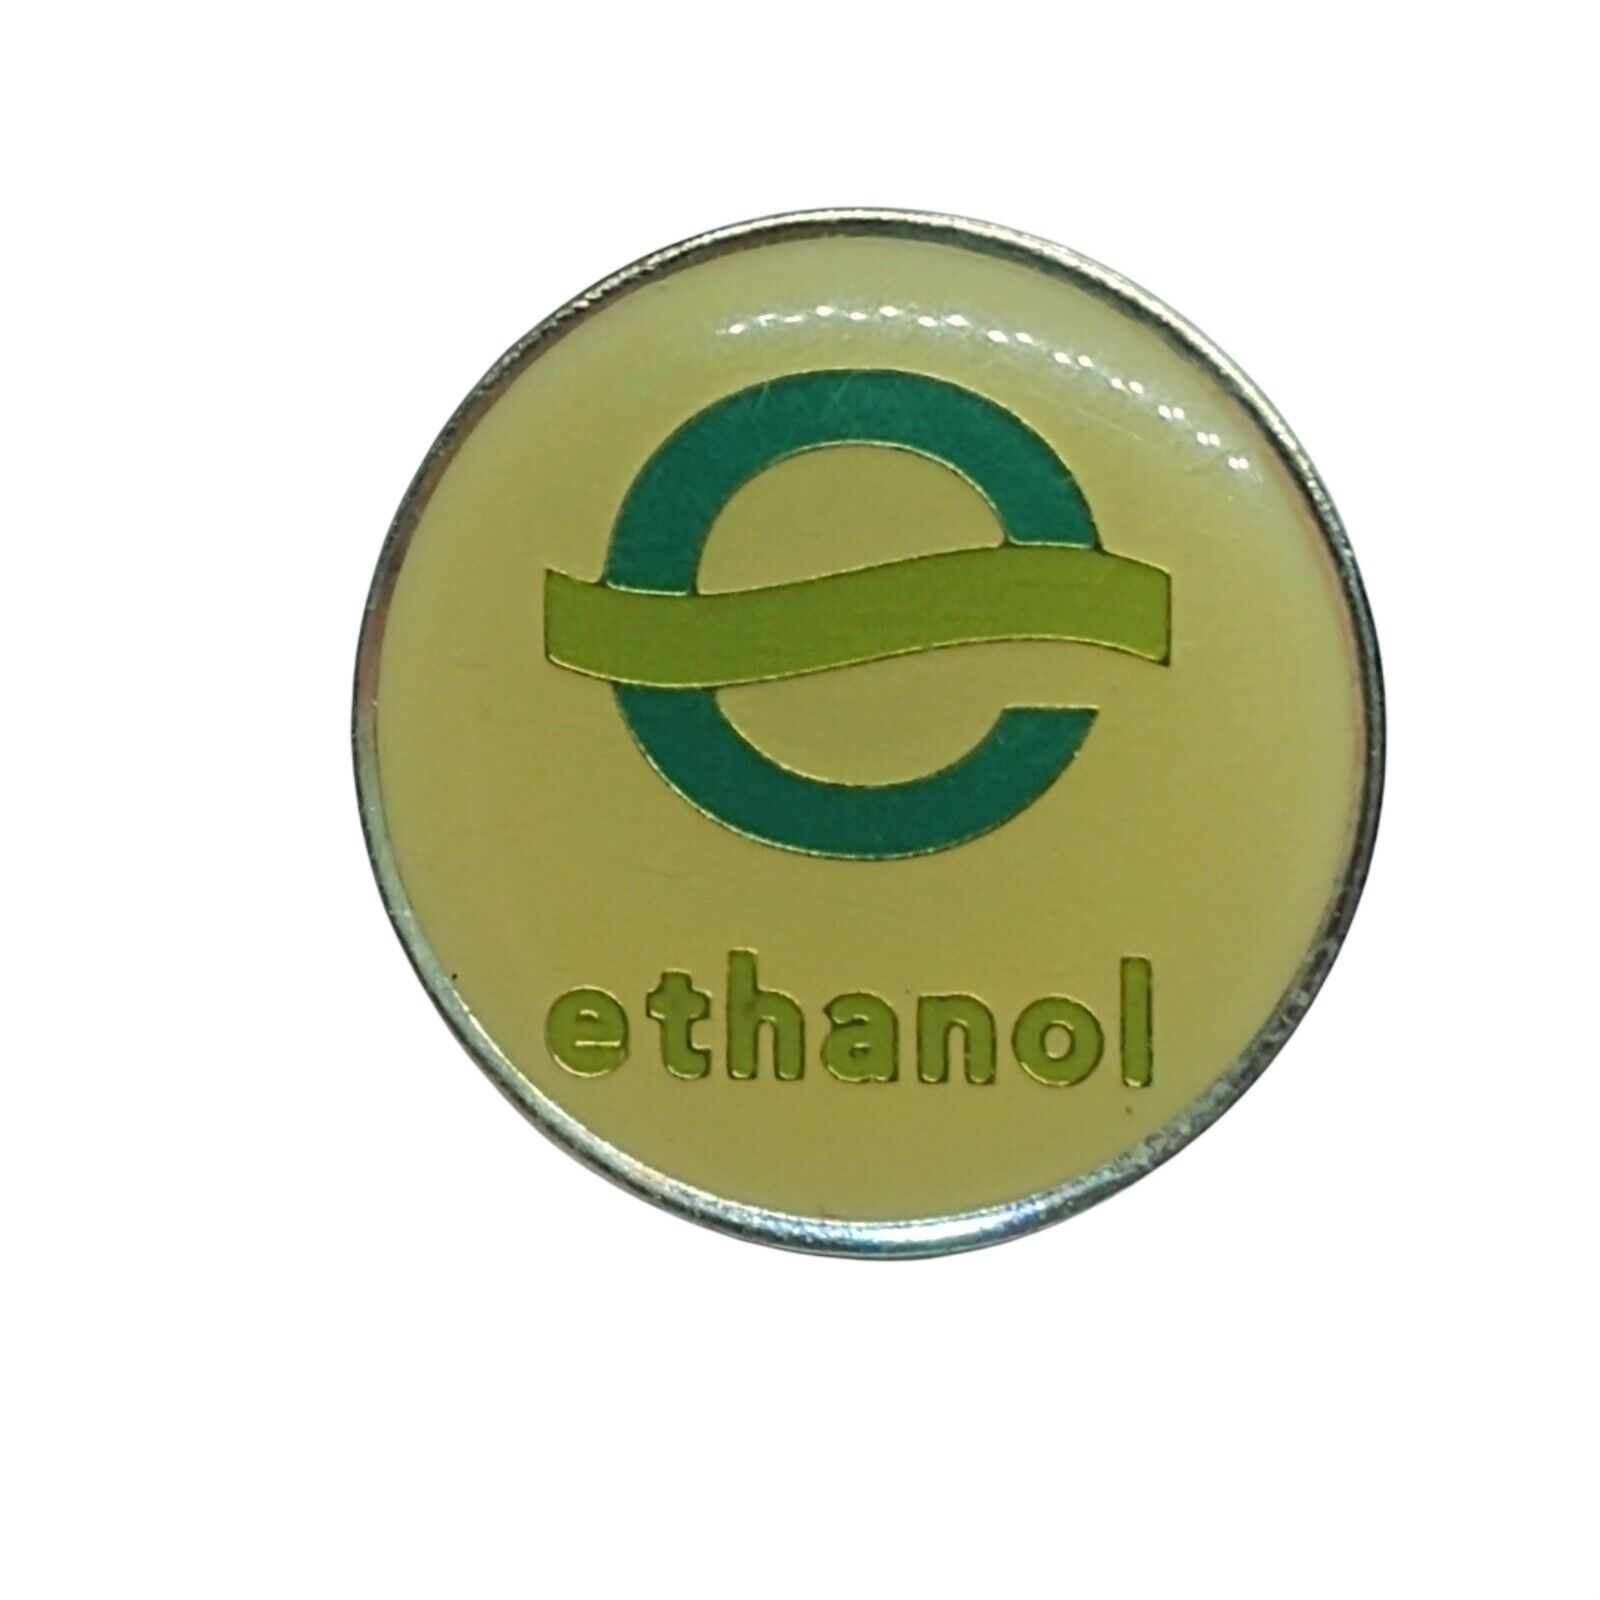 ETHANOL LAPEL PIN - Alcohol Alternative Fuel